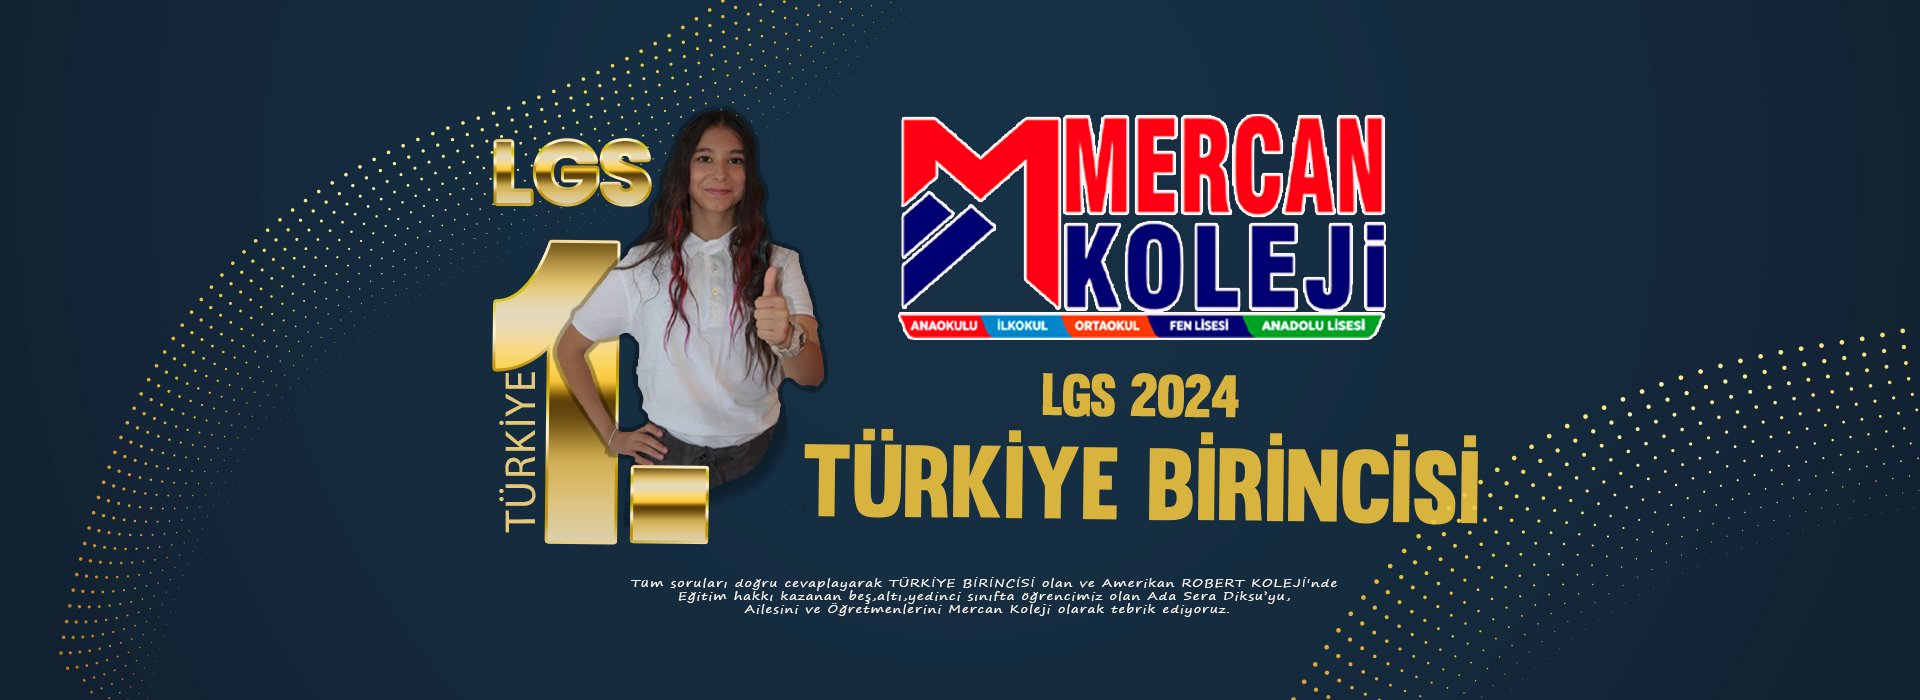 LGS 2024 Türkiye Birincisi. Malatya Mercan Koleji